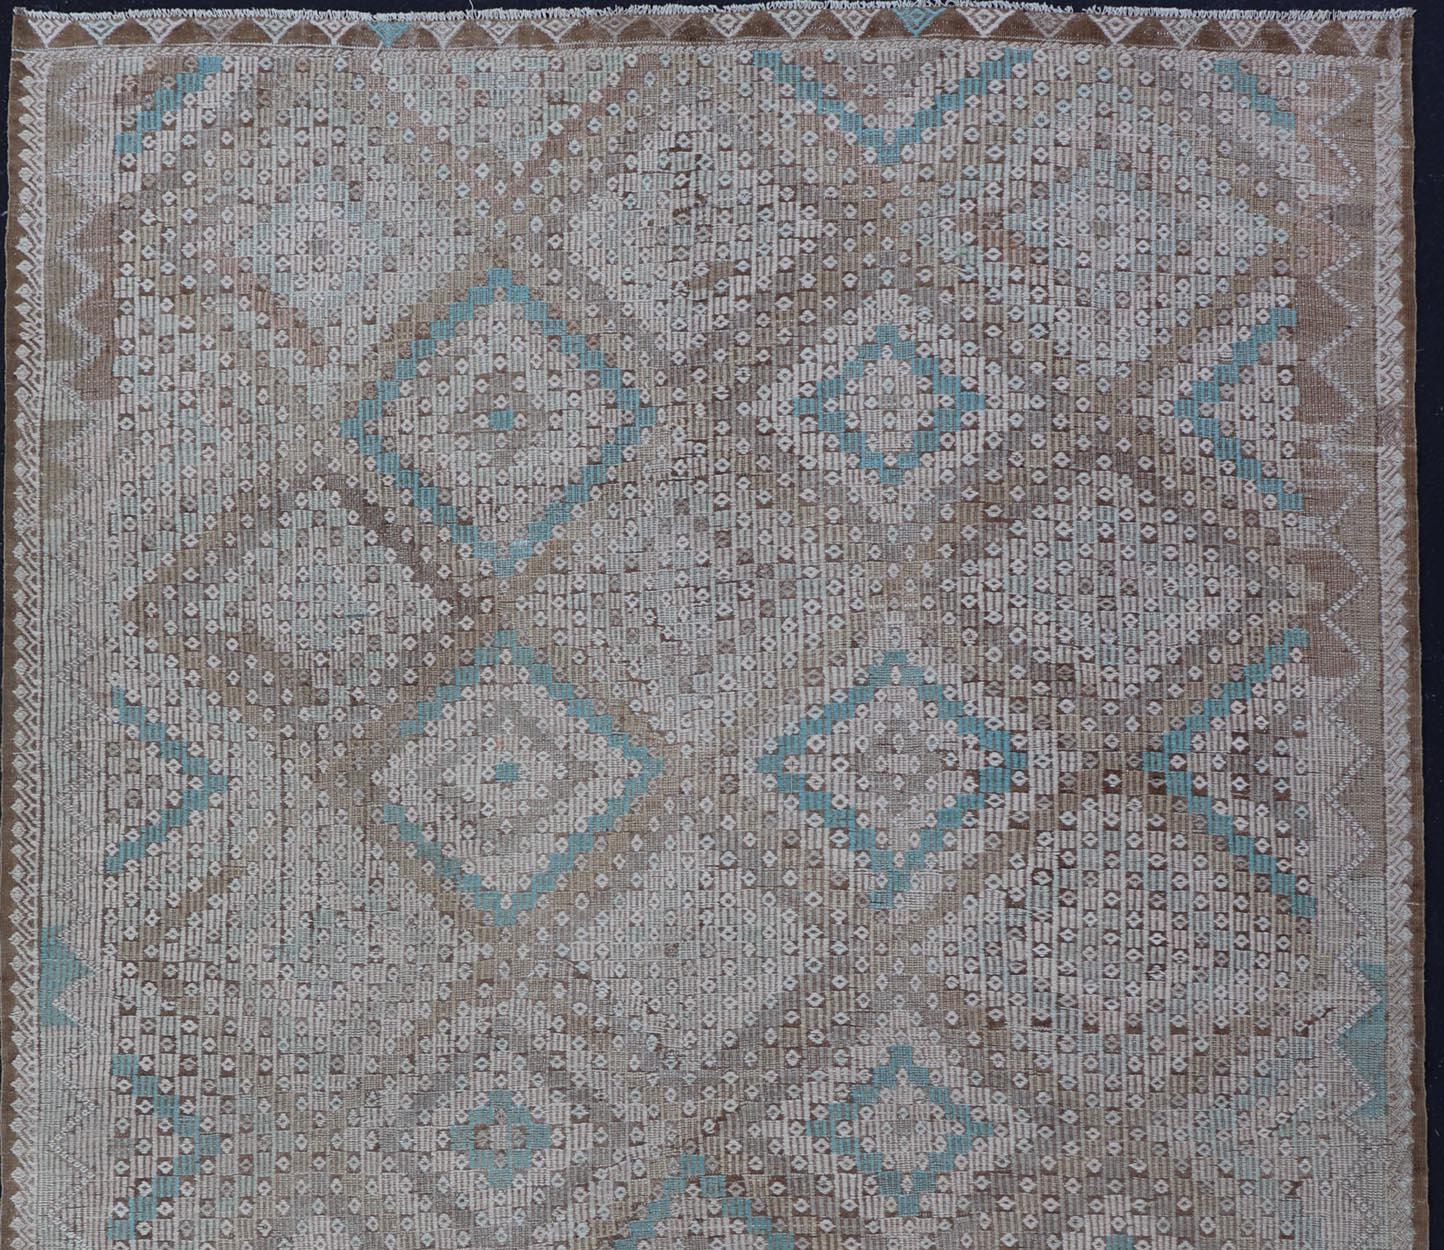 Vintage Turkish Embroidered Flat-Weave Rug with Neutral-Toned Geometric Design. Keivan Woven Arts- Geometric design vintage Kilim rug from Turkey 
rug EN-13939, country of origin / type: Turkey / Kilim, circa 1950.

Measures: 7'3 x 10'0.